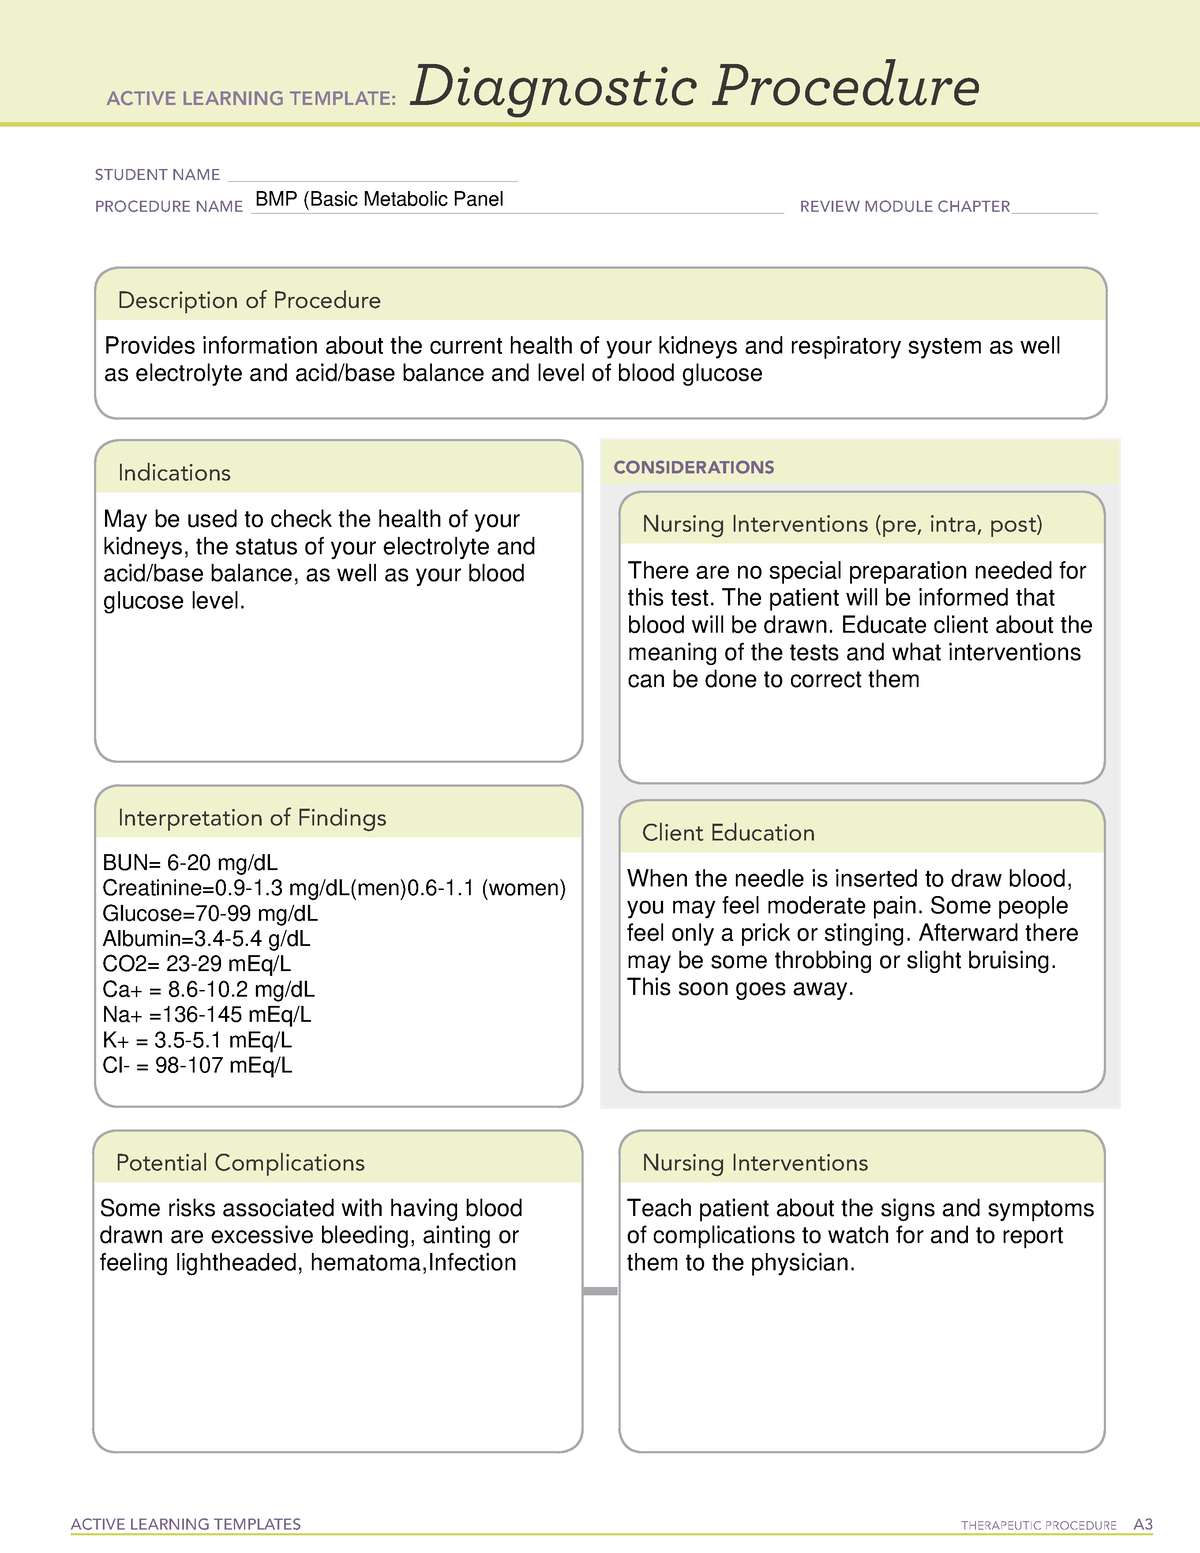 ati-bmp-diagnostic-procedure-sheet-active-learning-templates